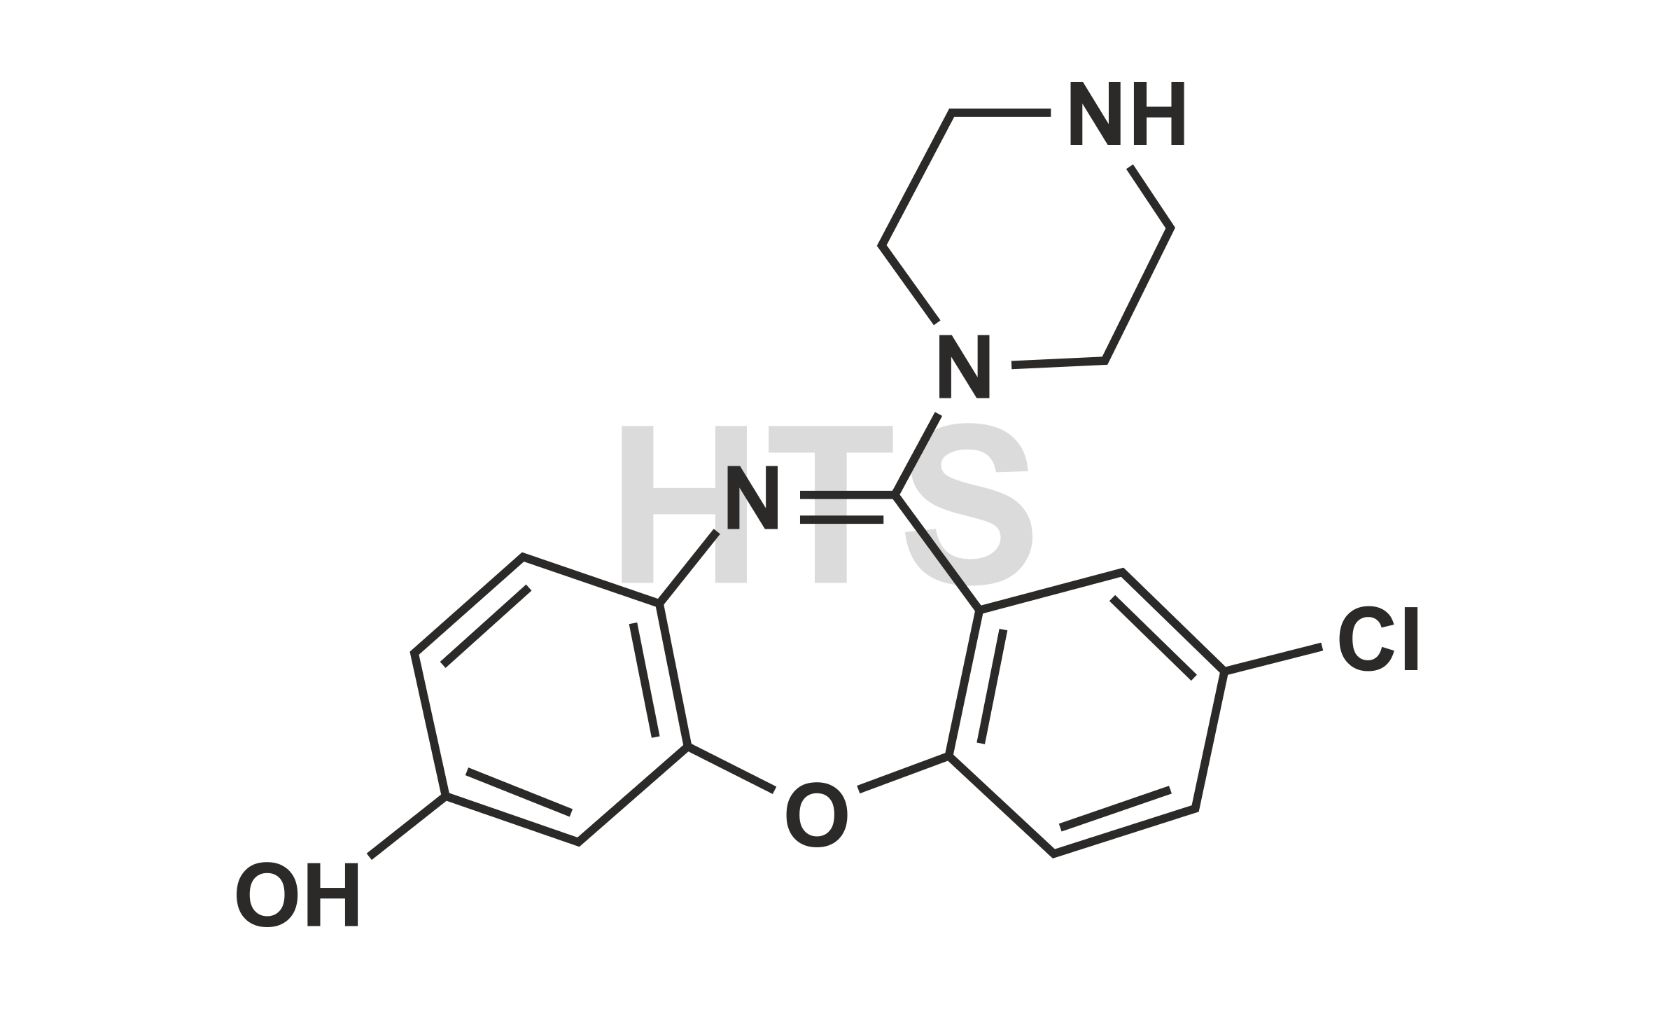 Amoxapine 7-Hydroxy Impurity